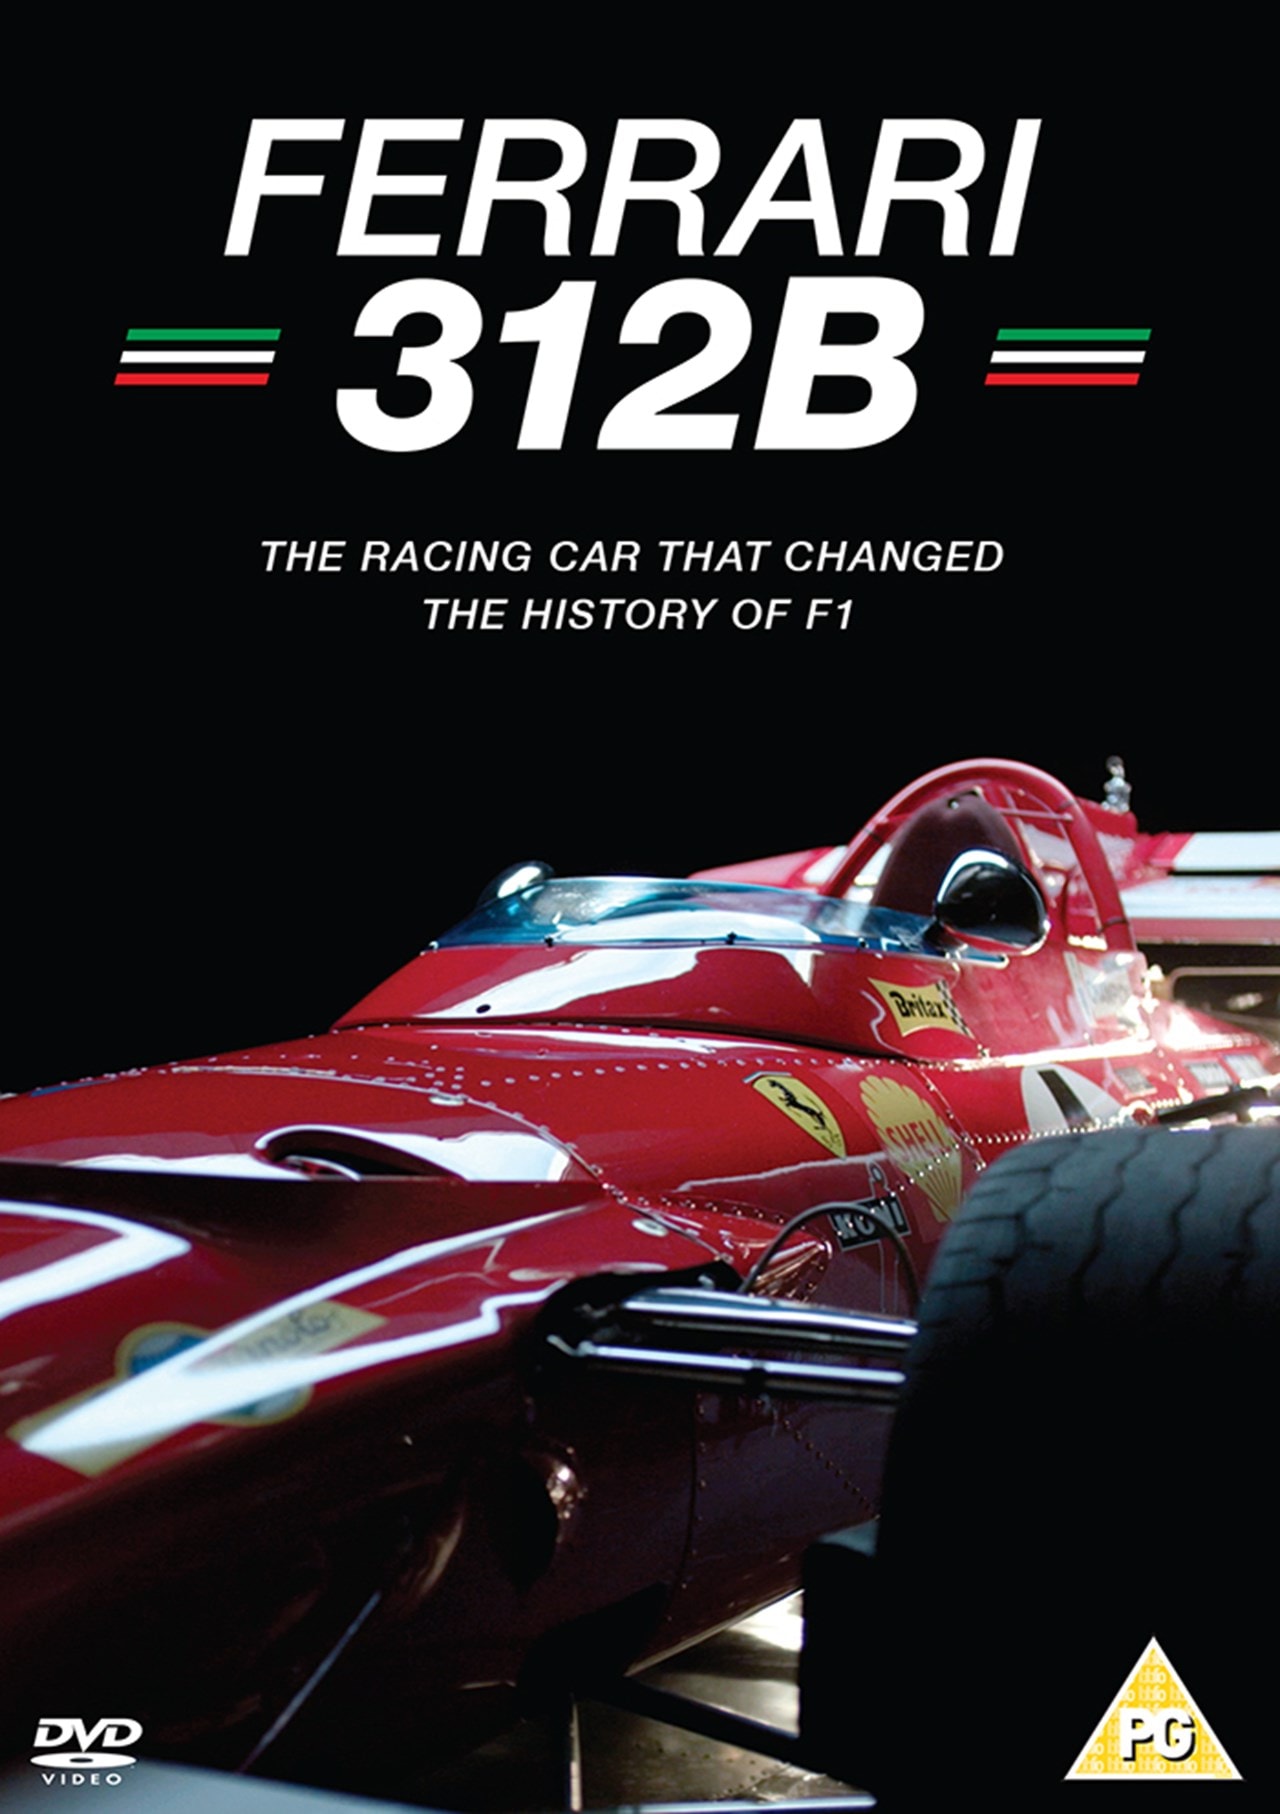 Ferrari 312B | DVD | Free shipping over £20 | HMV Store